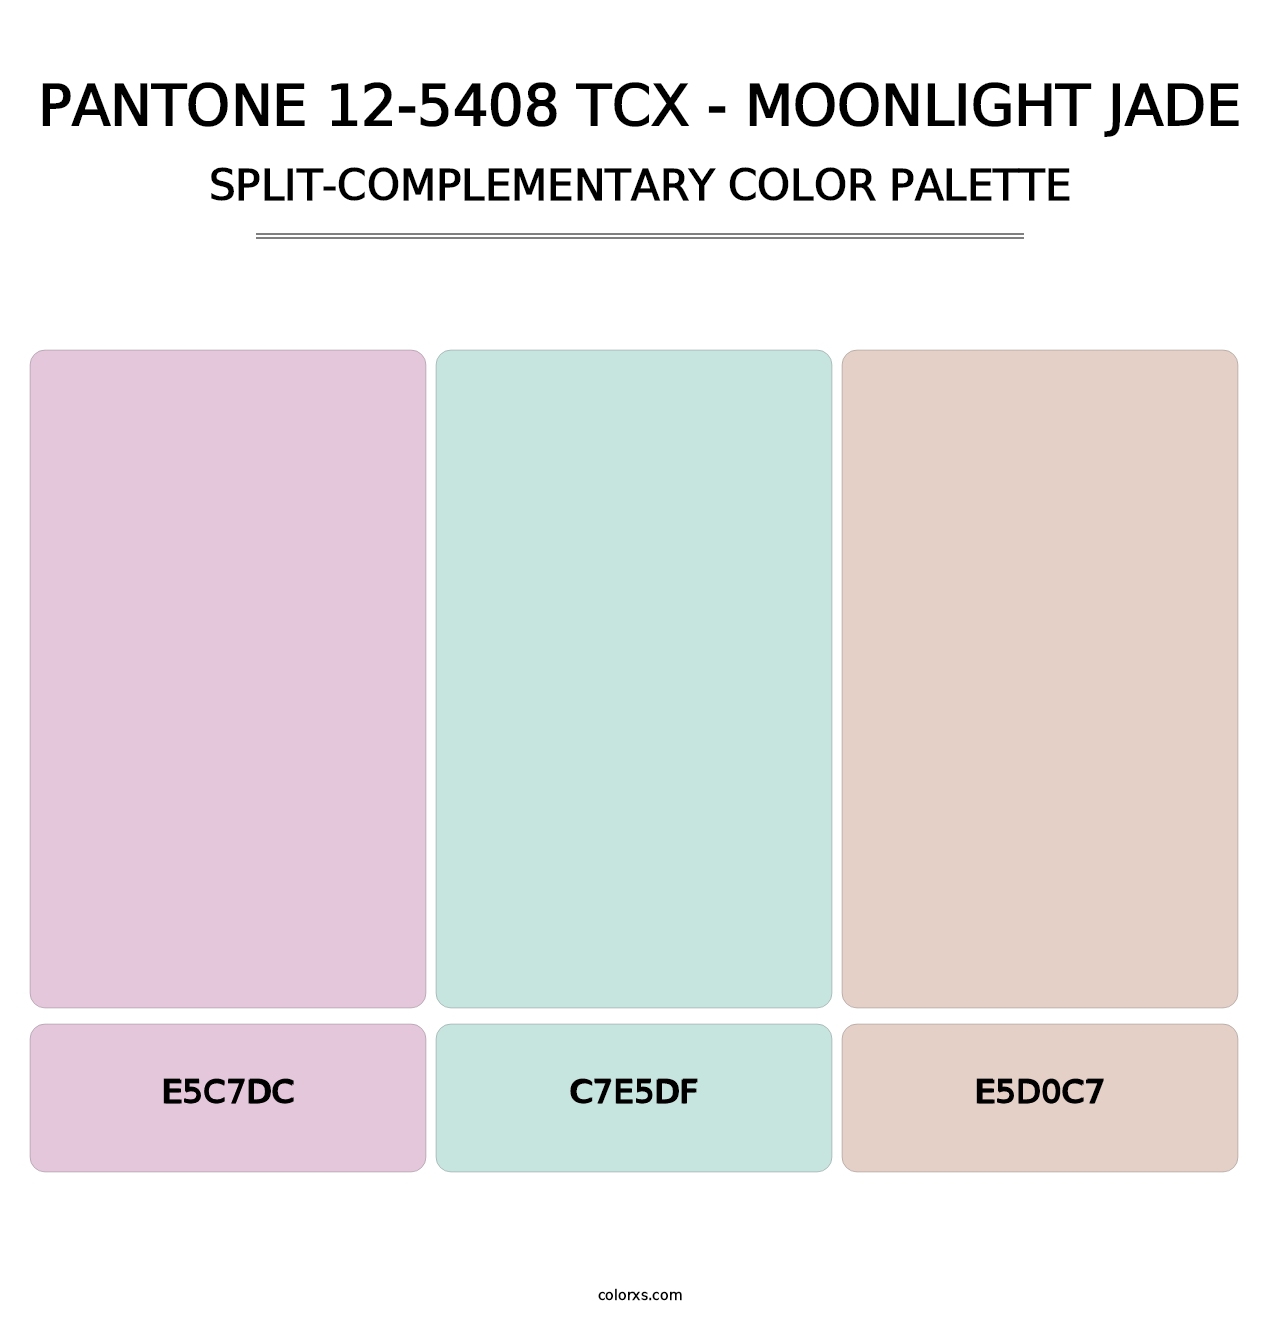 PANTONE 12-5408 TCX - Moonlight Jade - Split-Complementary Color Palette